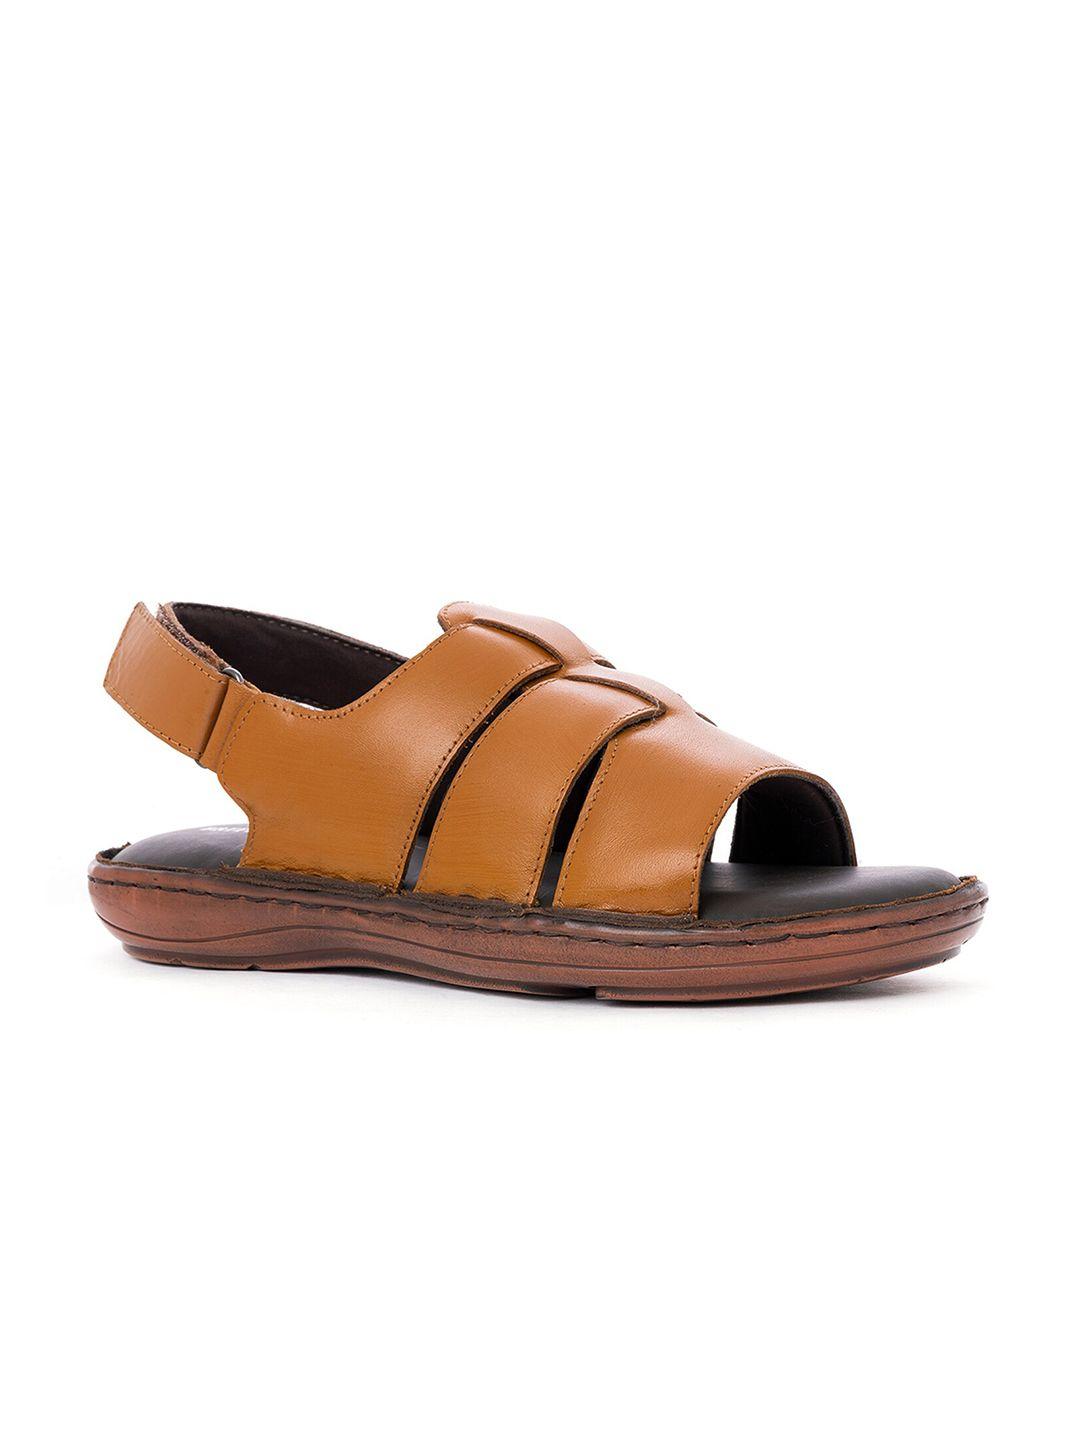 khadims men tan & black leather comfort sandals